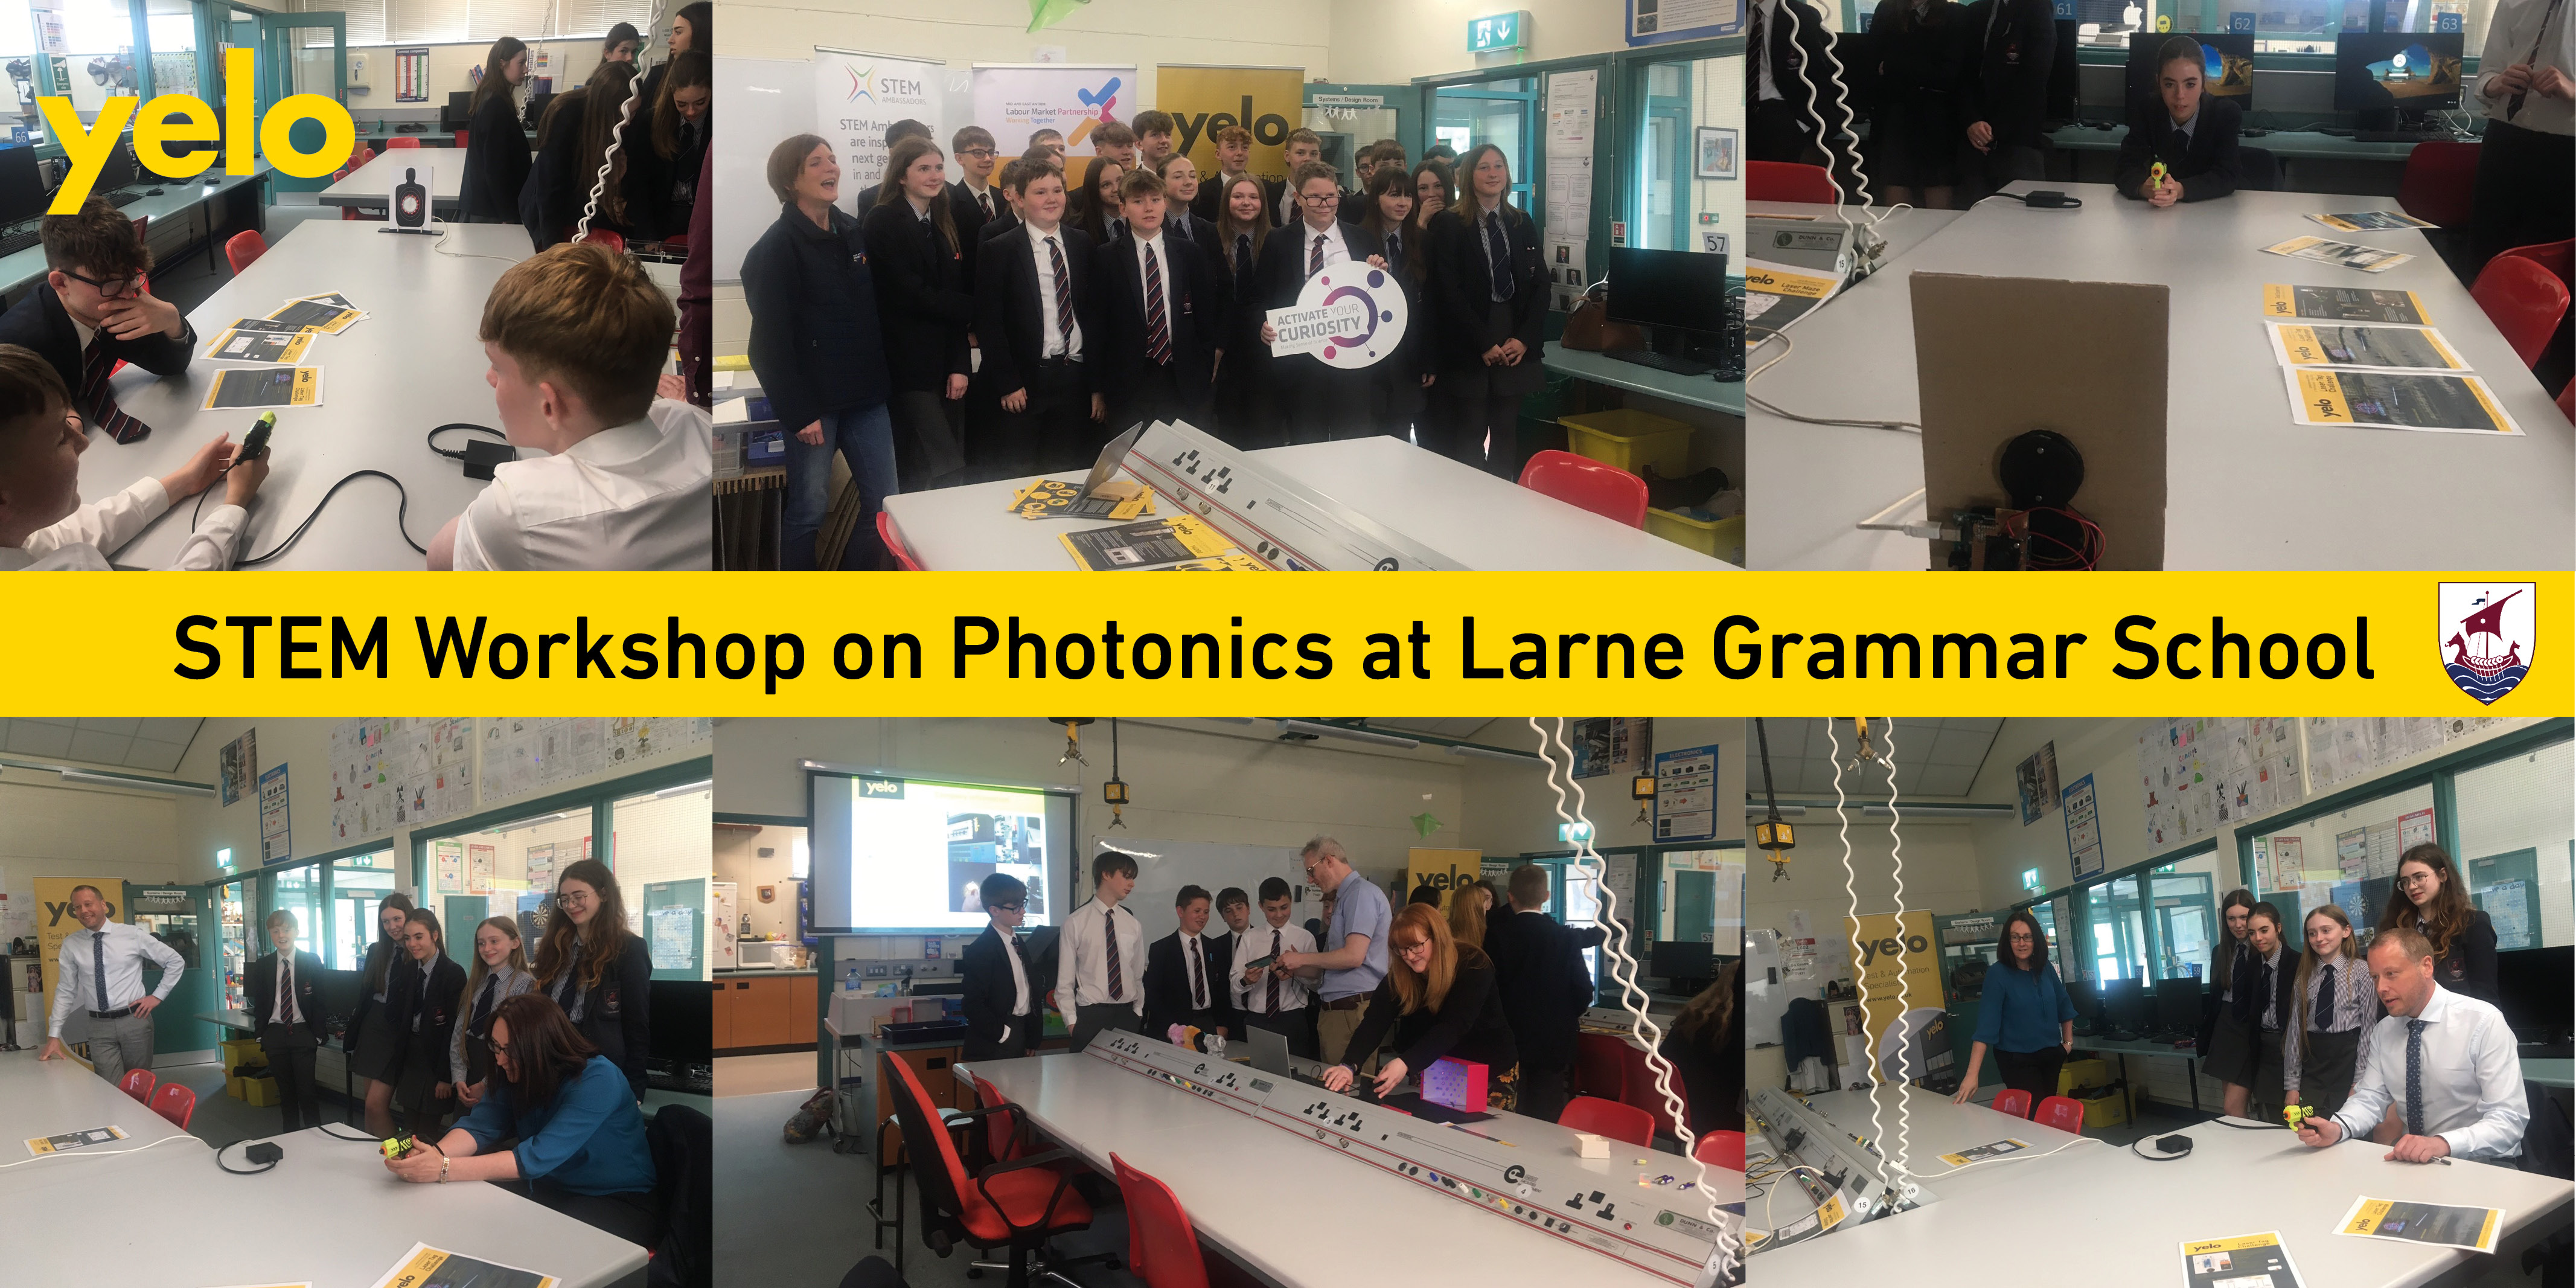 Larne Grammar Year 9 Pupils taking part in the Yelo STEM Workshop on Photonics